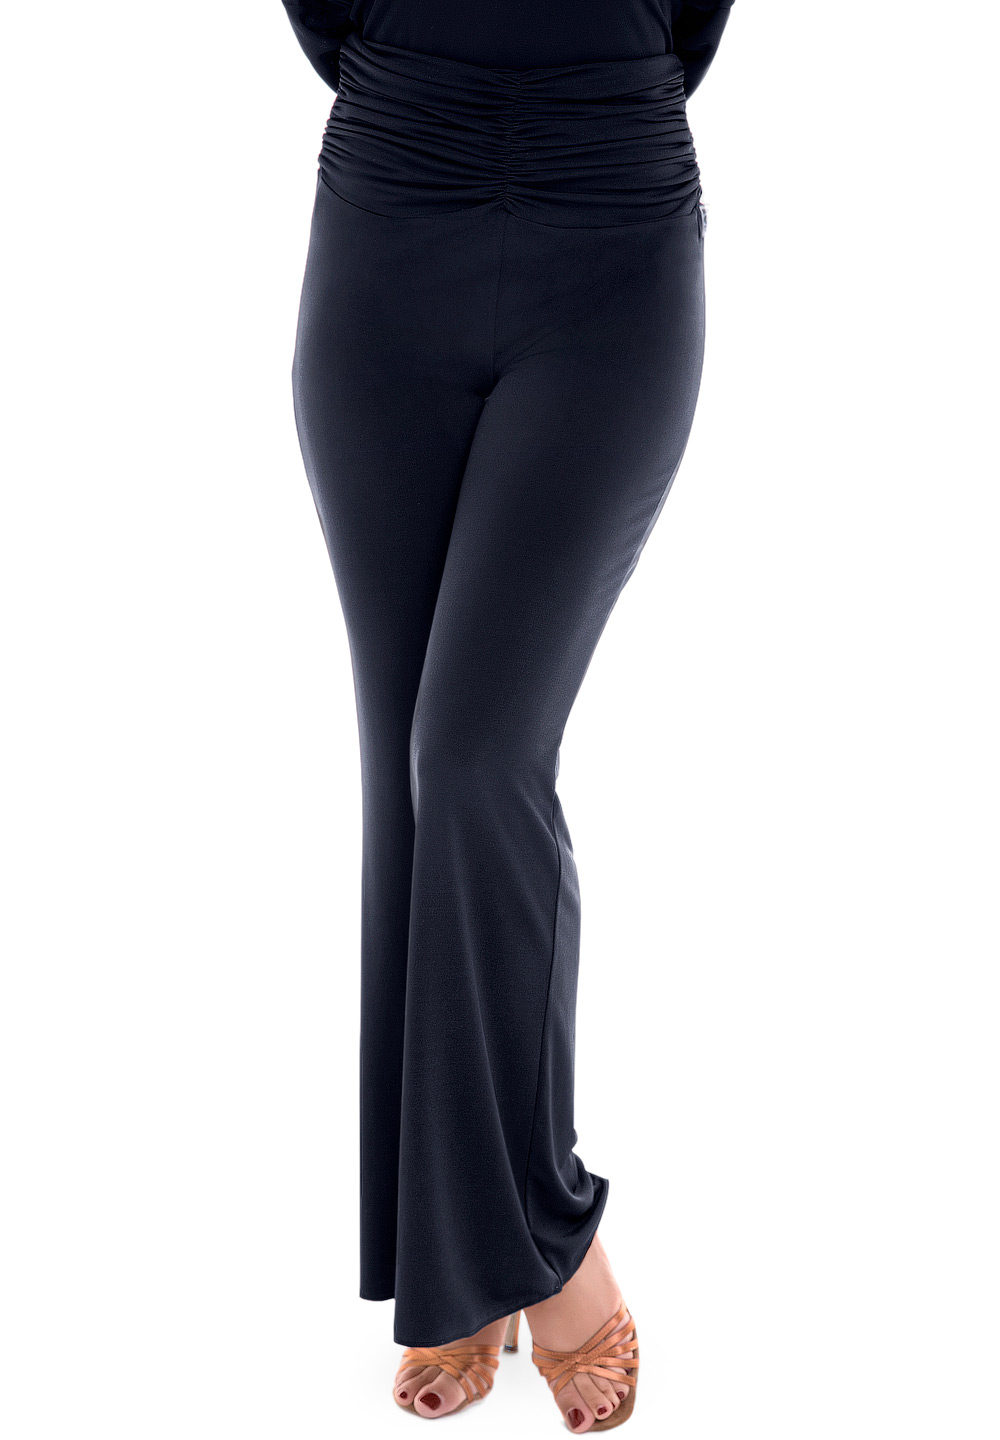 New* Maniere de voir Black ruched side flare leggings | Clothes design,  Outfit inspo, Flare leggings